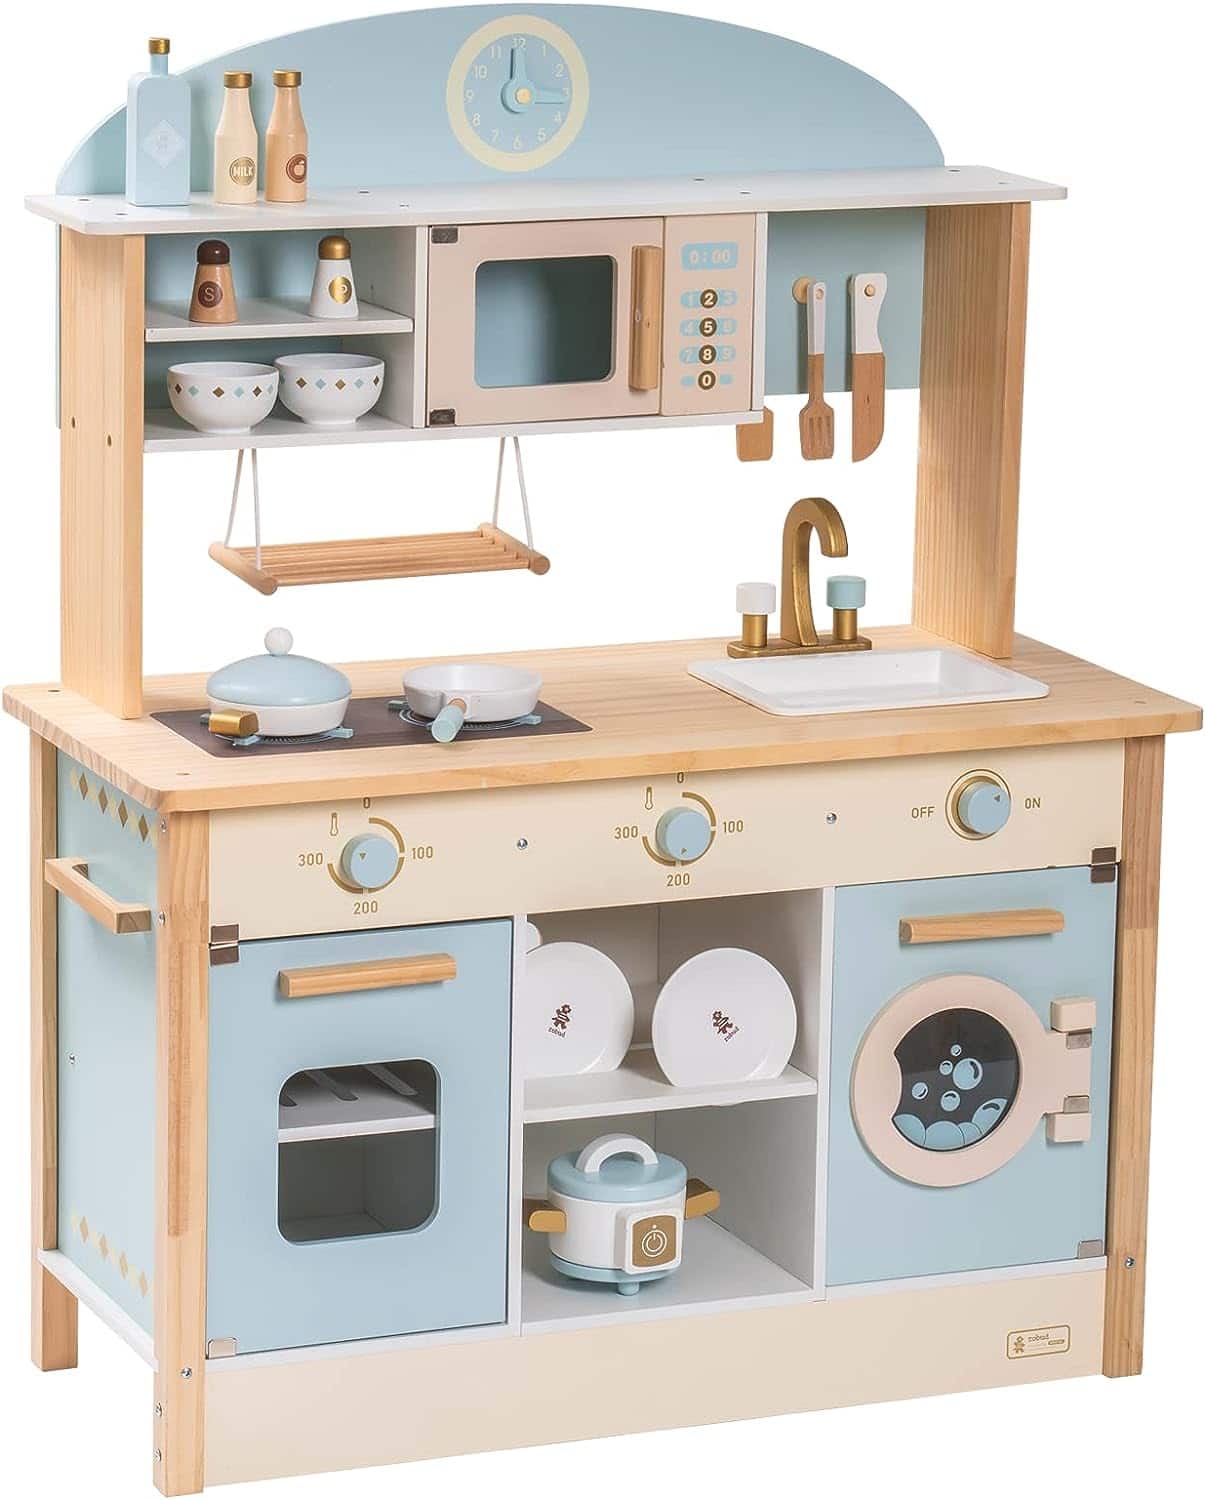 ROBUD Wooden Play Kitchen Set